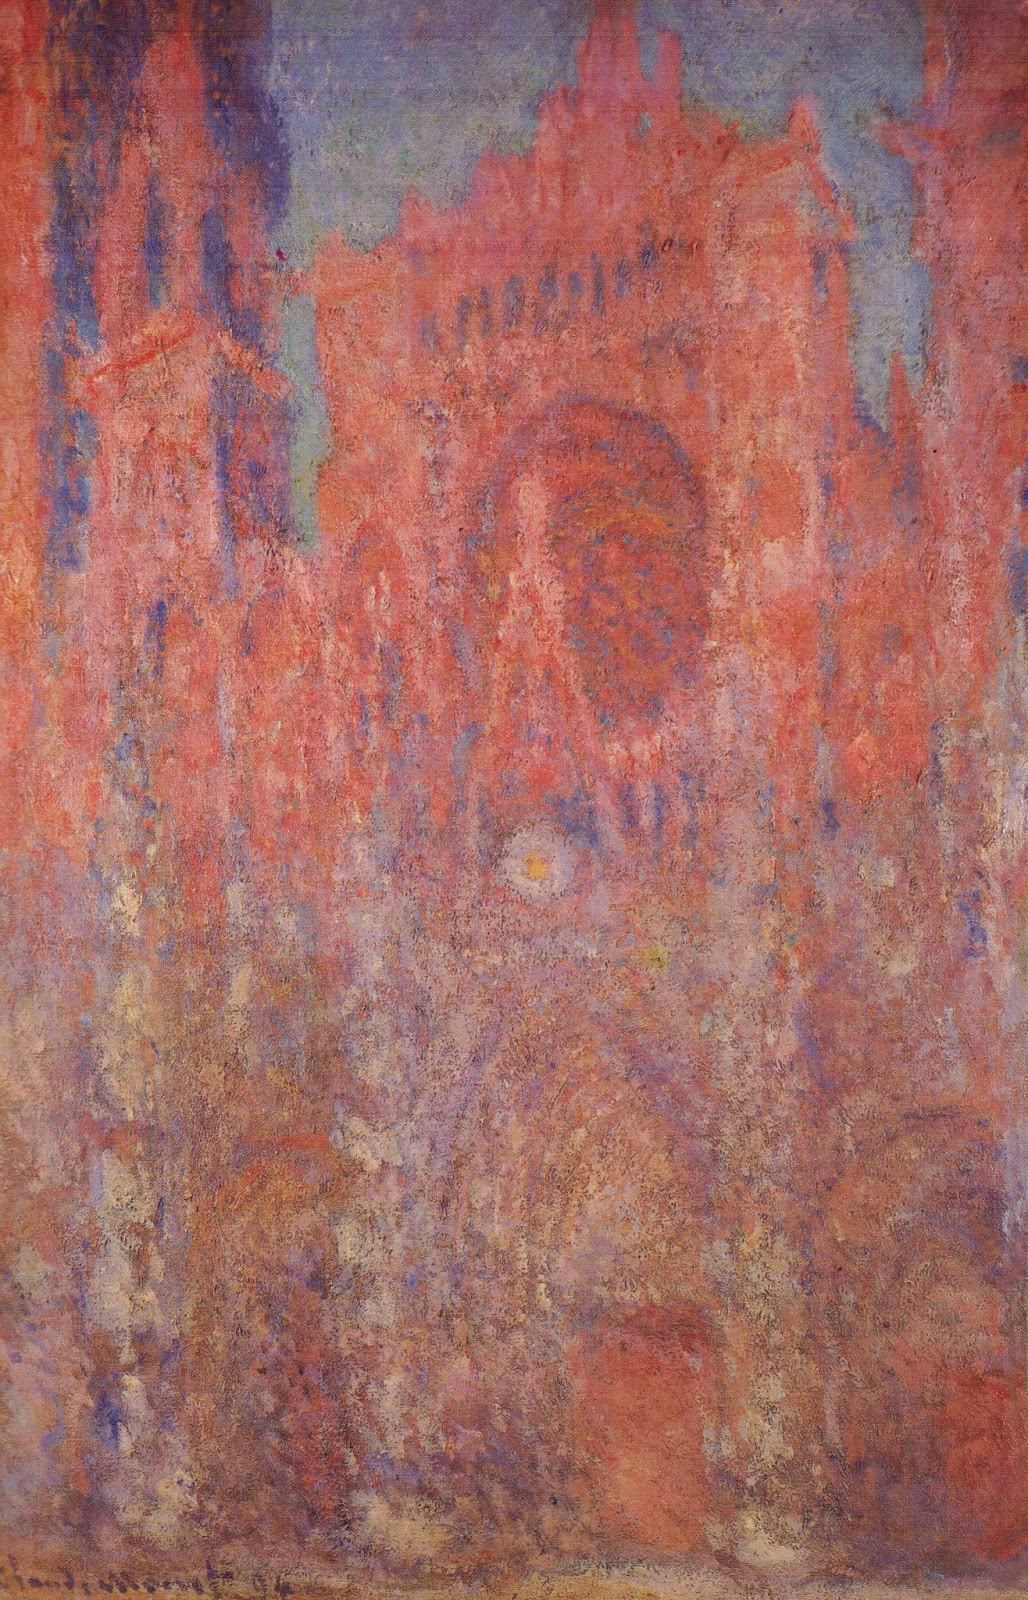 Claude+Monet-1840-1926 (619).jpg